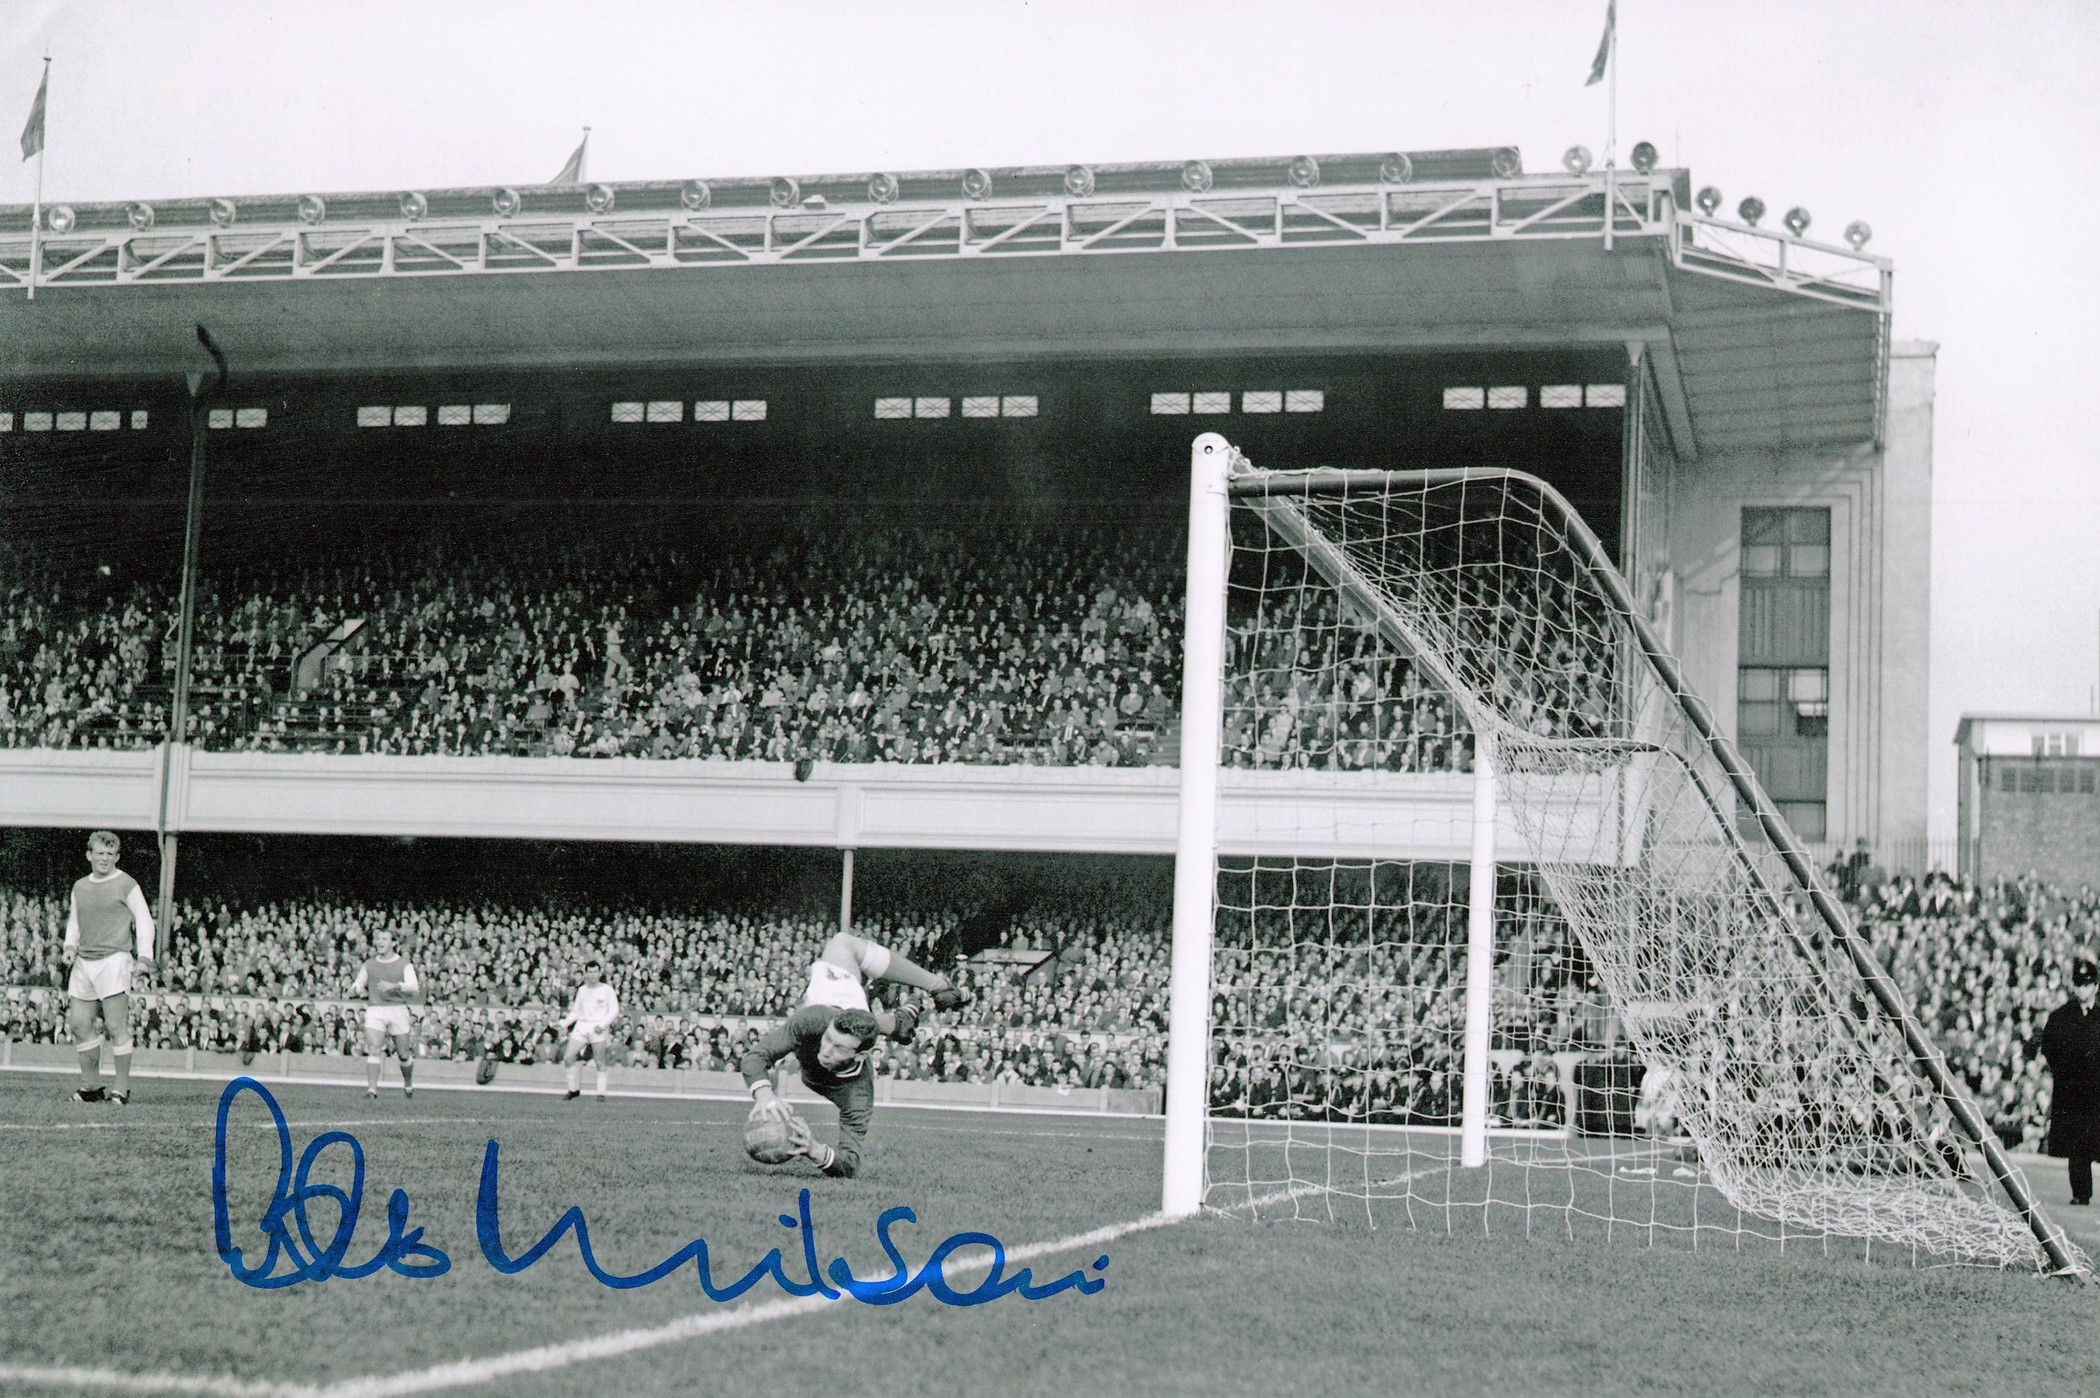 Football Bob Wilson signed 12x8 black and white Arsenal photo. Robert Primrose Bob Wilson OBE (